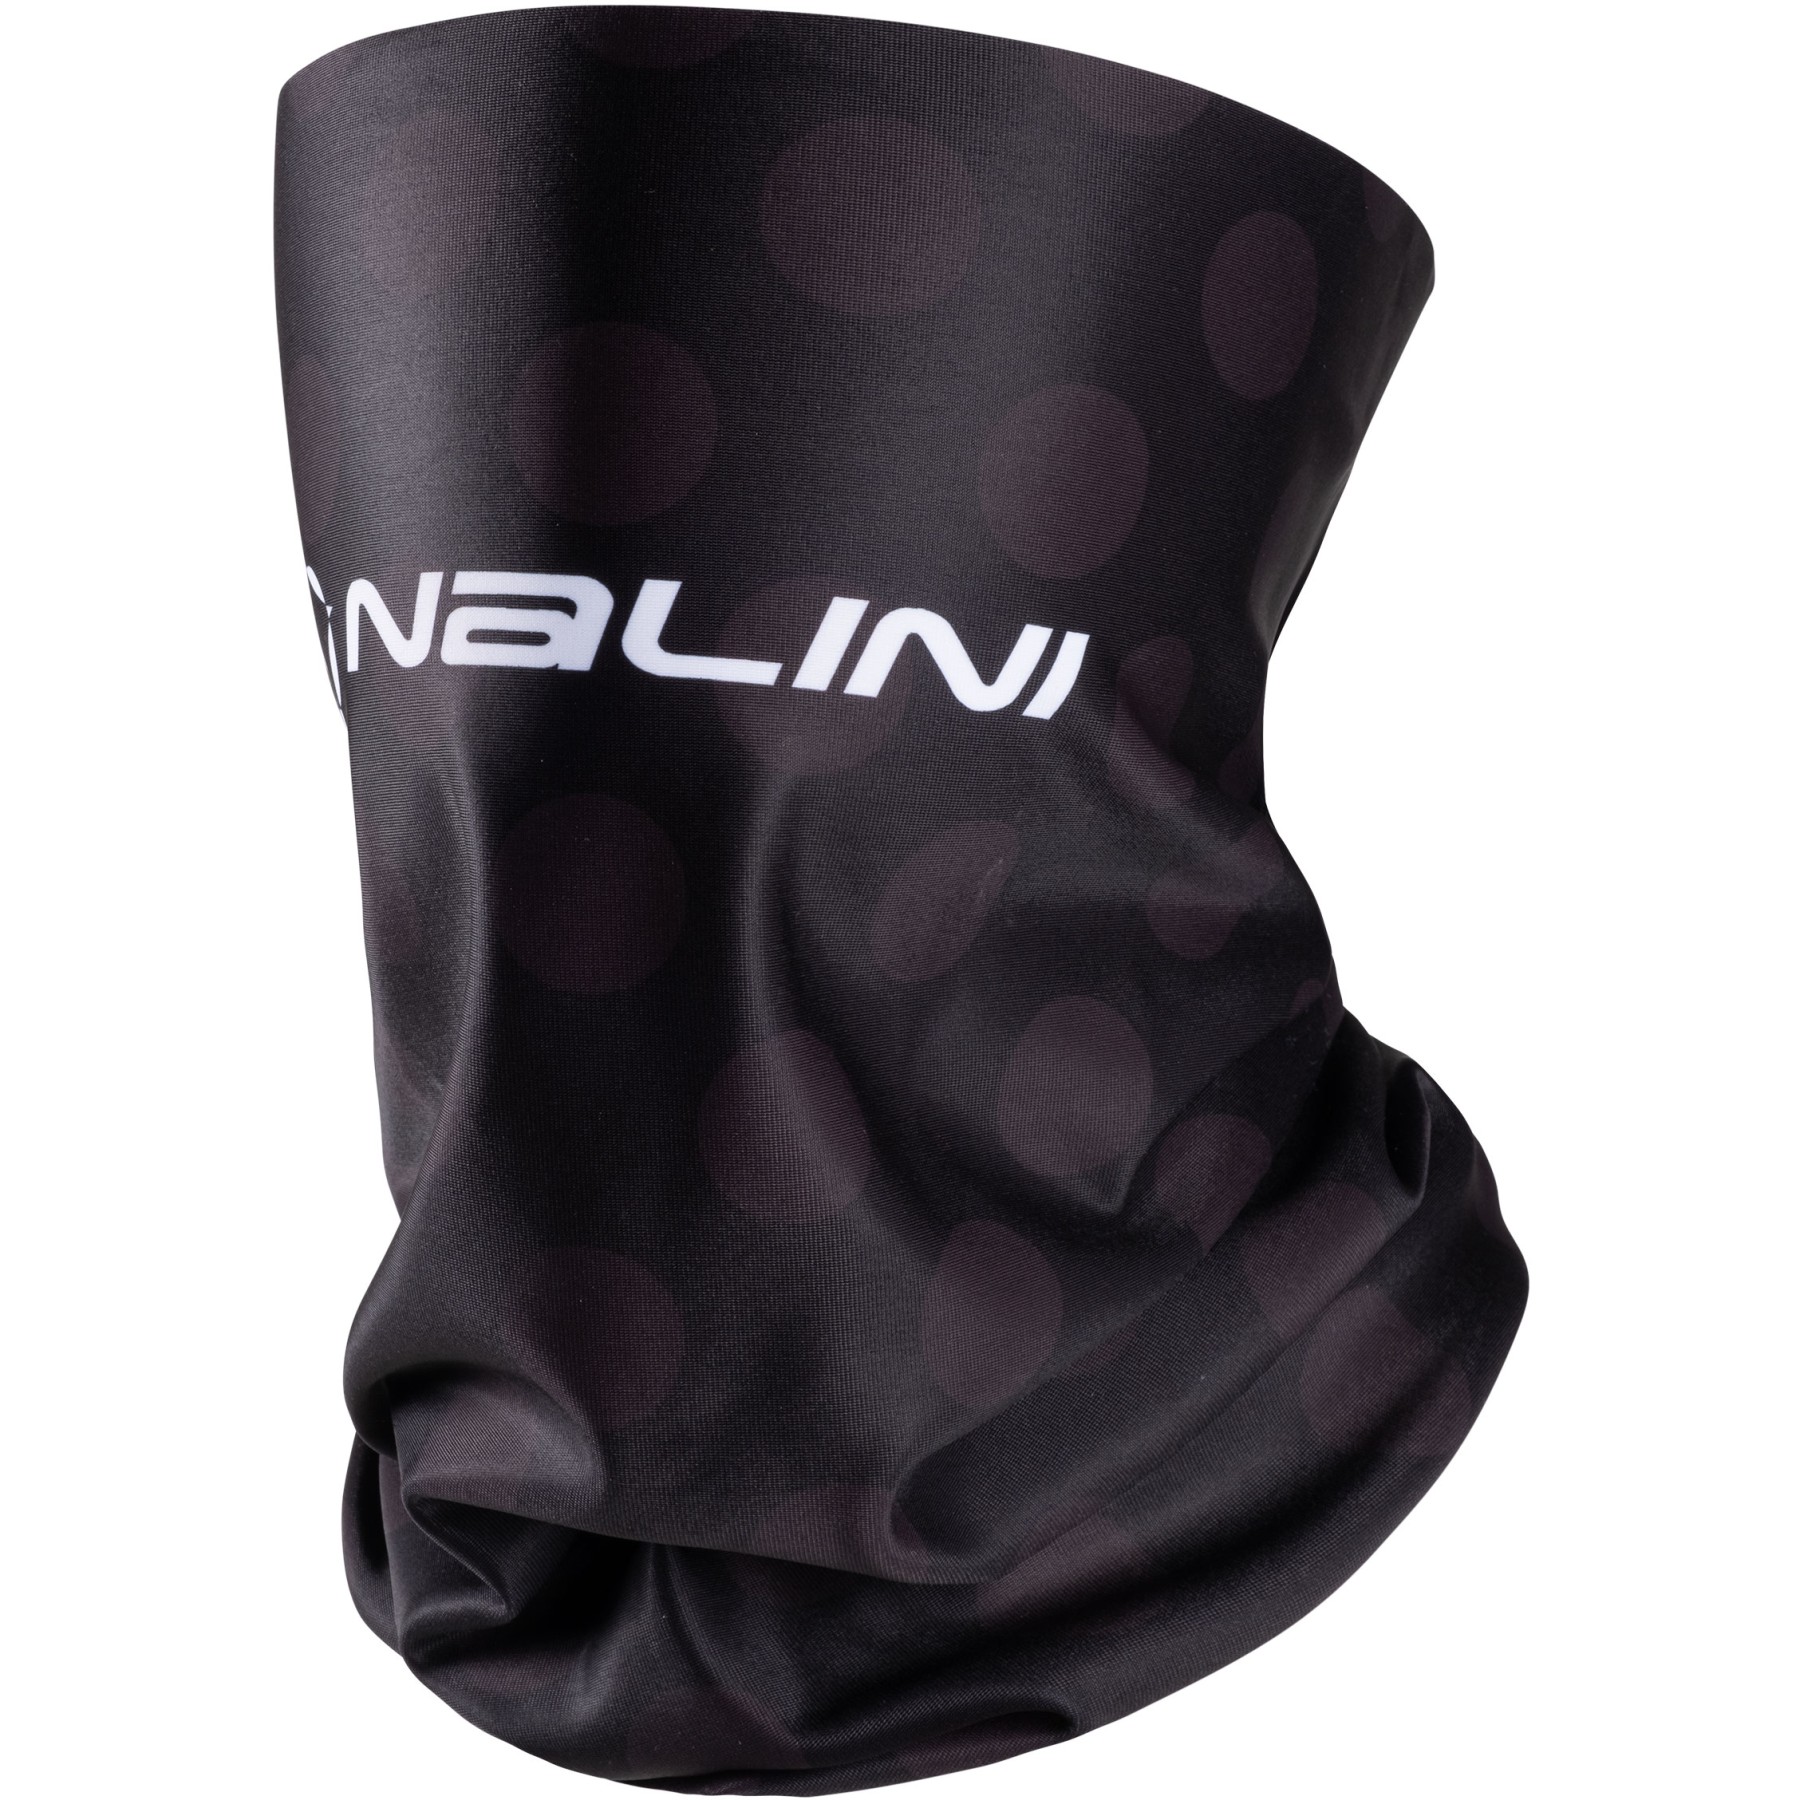 Productfoto van Nalini New Winter Tube Sjaal - black/pois 4010